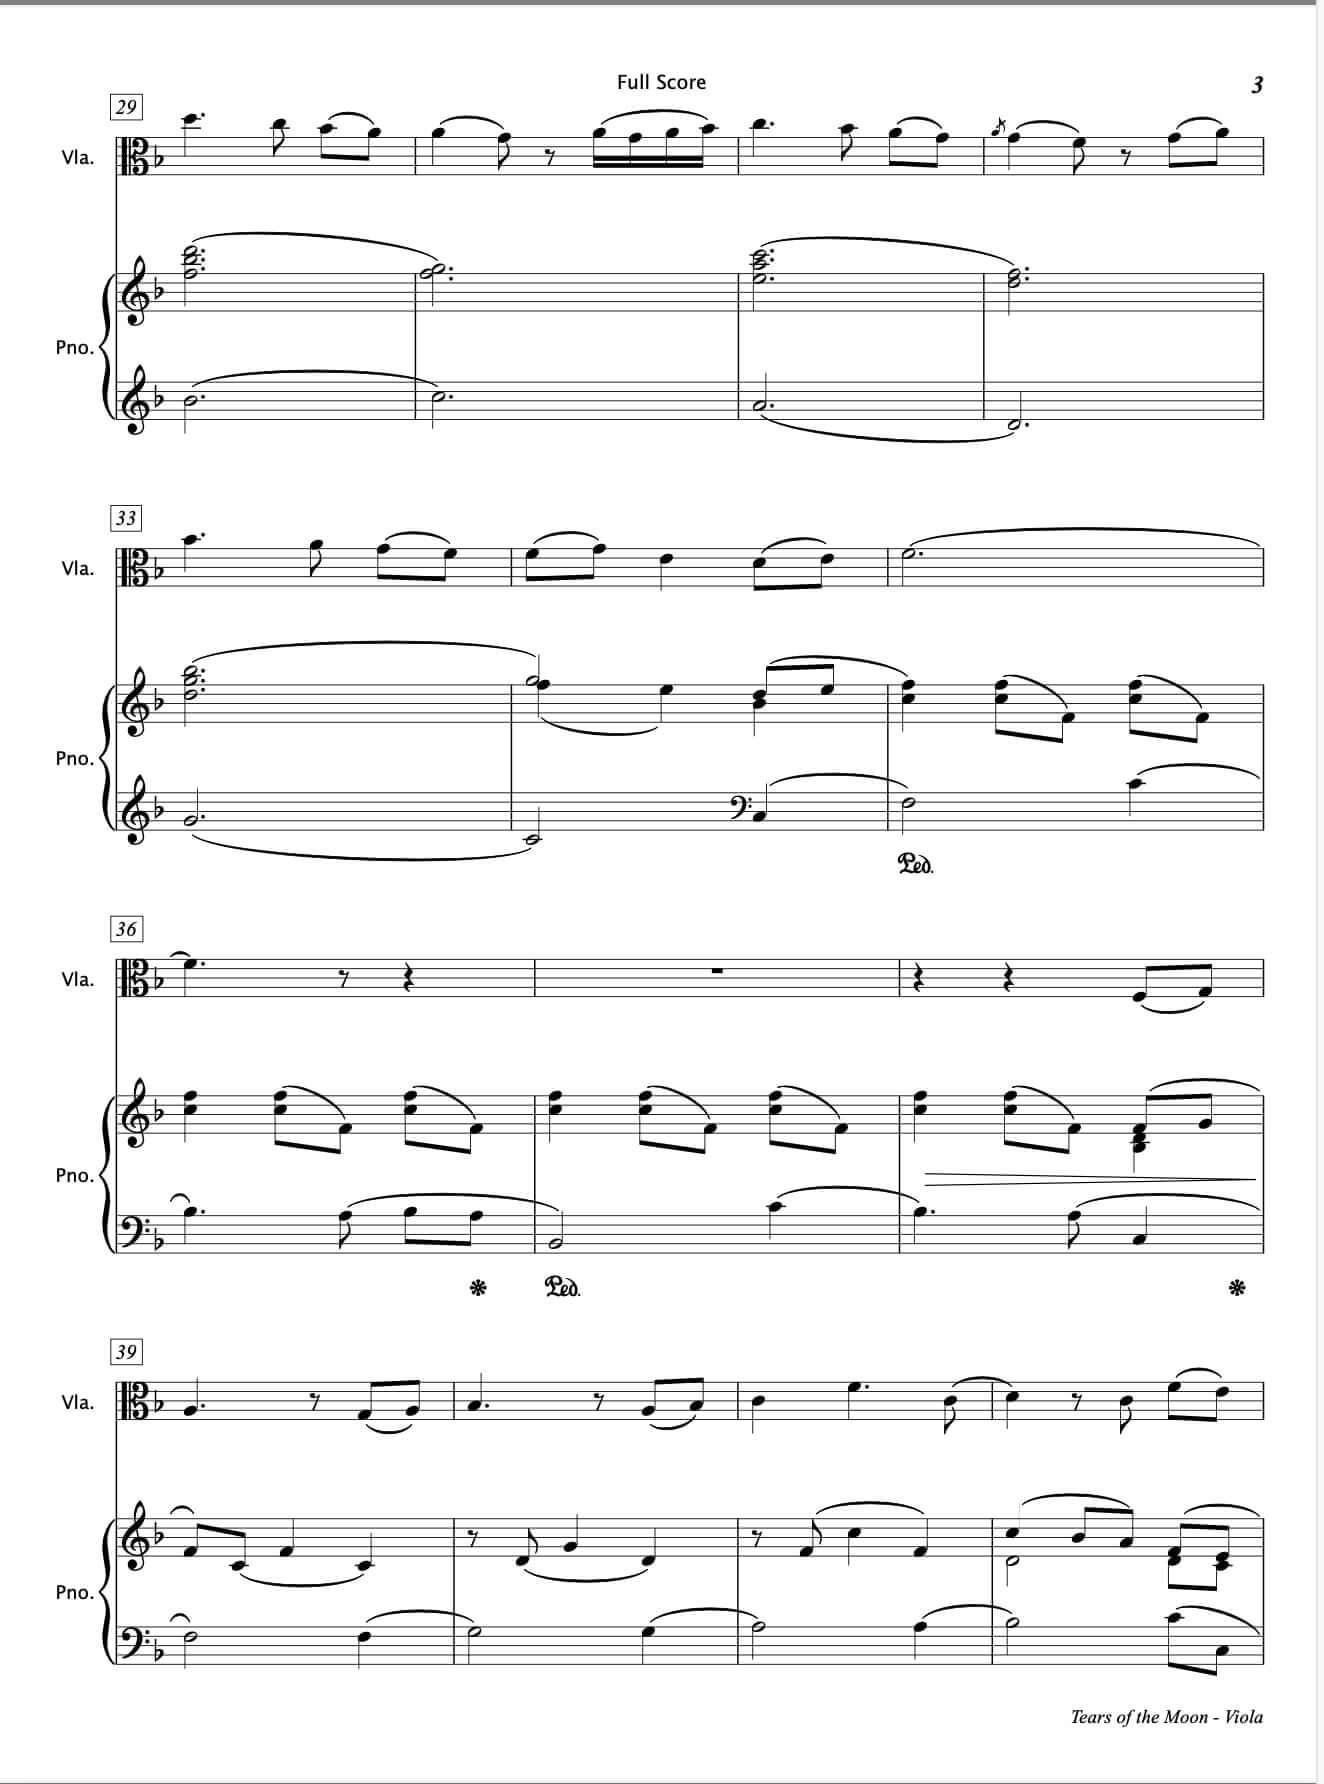 Tears of the Moon [Viola & Piano] - Paul Barker Music 